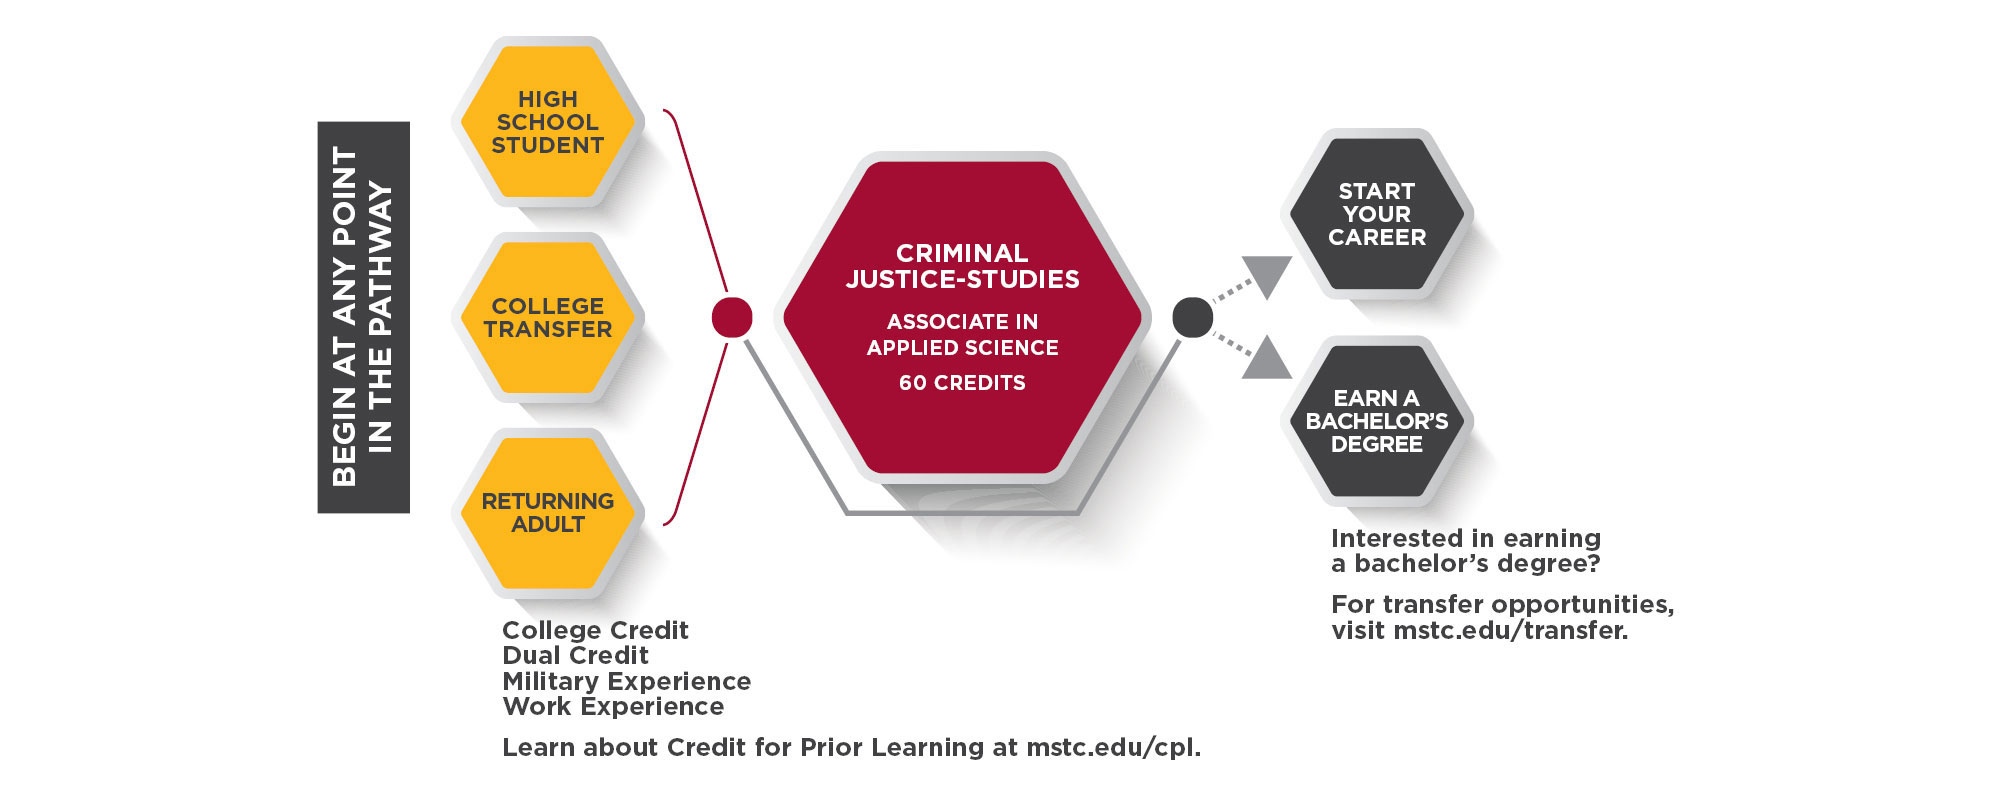 Criminal Justice Studies Pathway Graphic